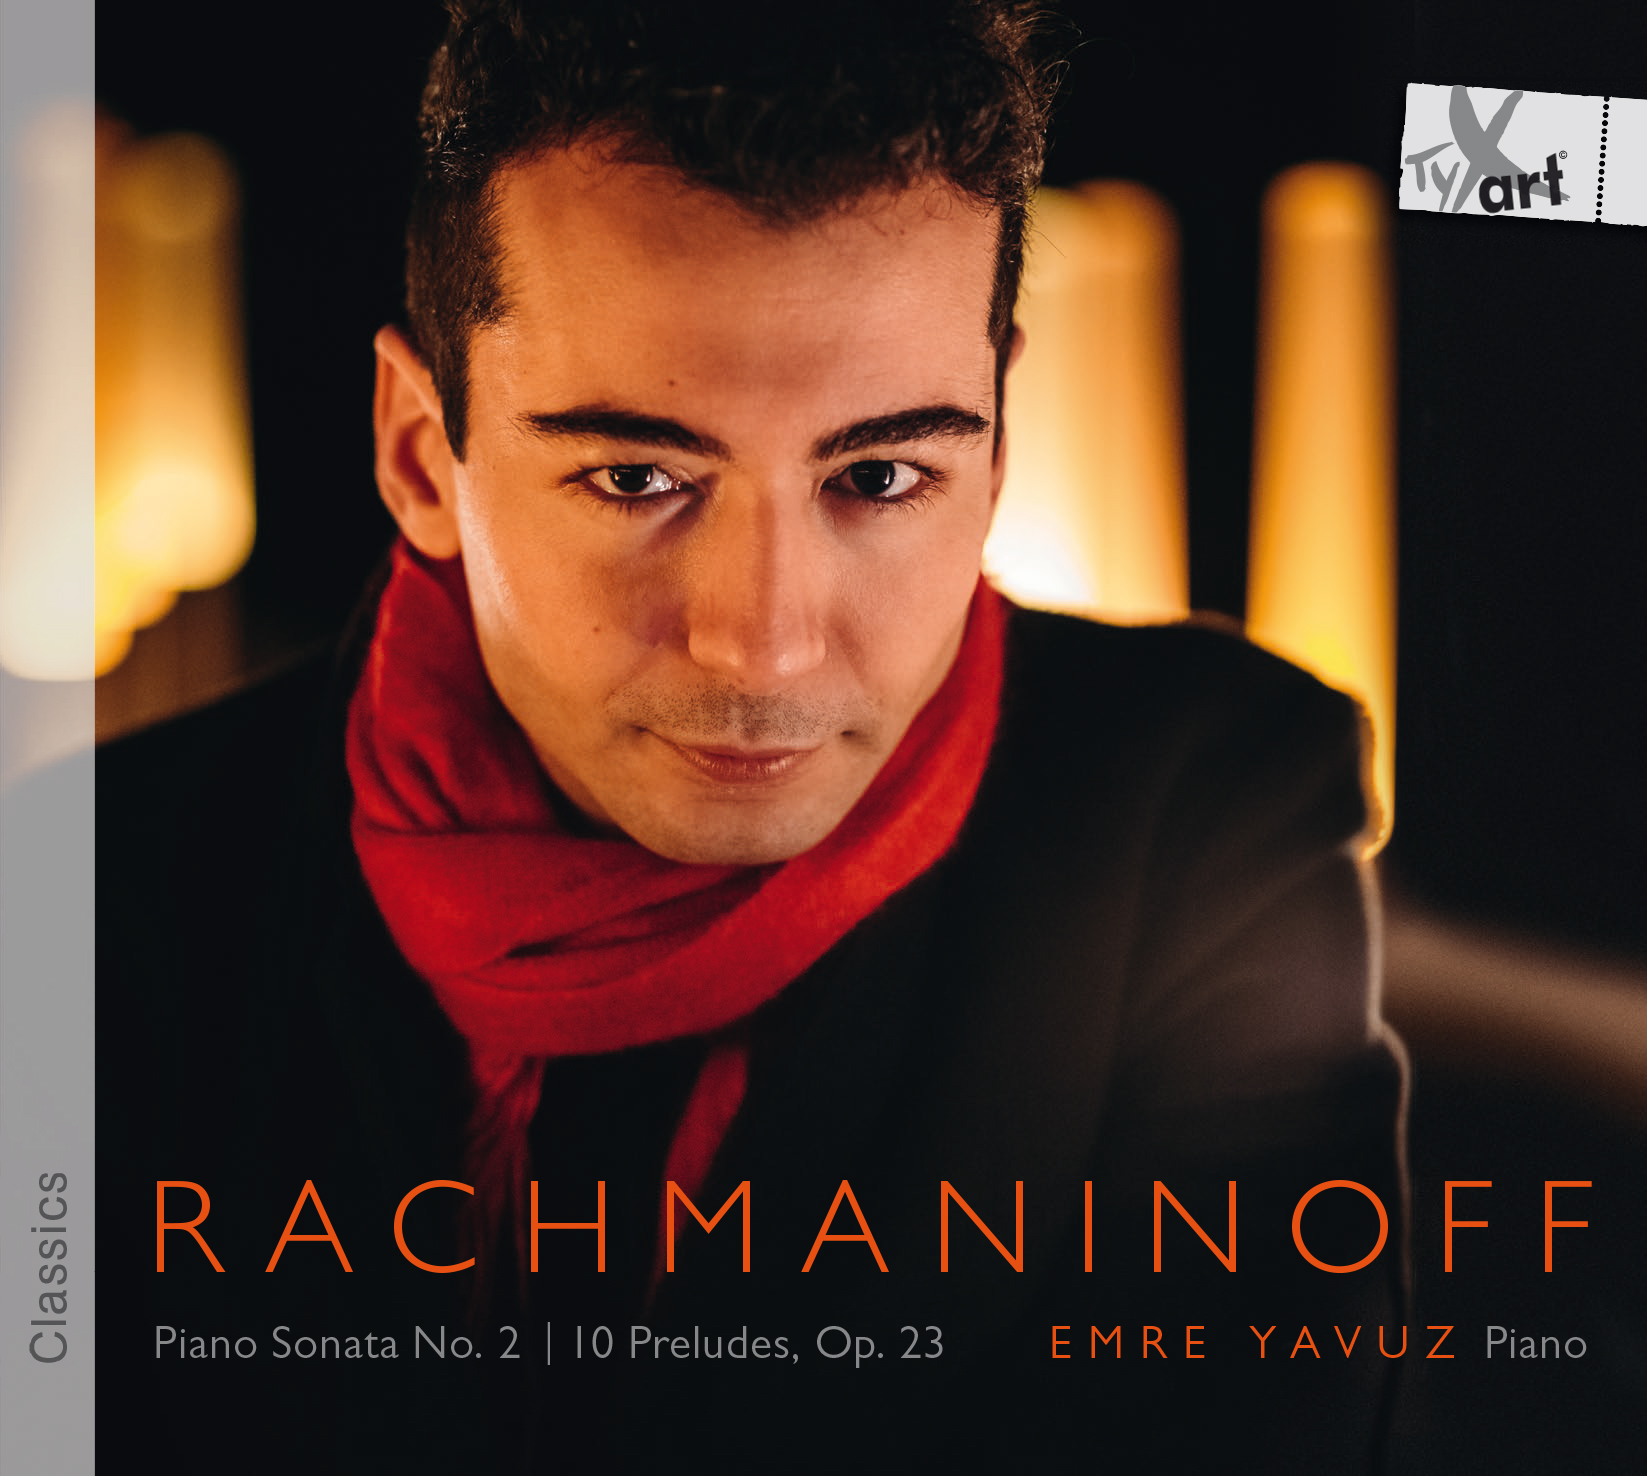 Rachmaninoff - Sonata No. 2 and Preludes Op. 23 - Emre Yavuz, Piano